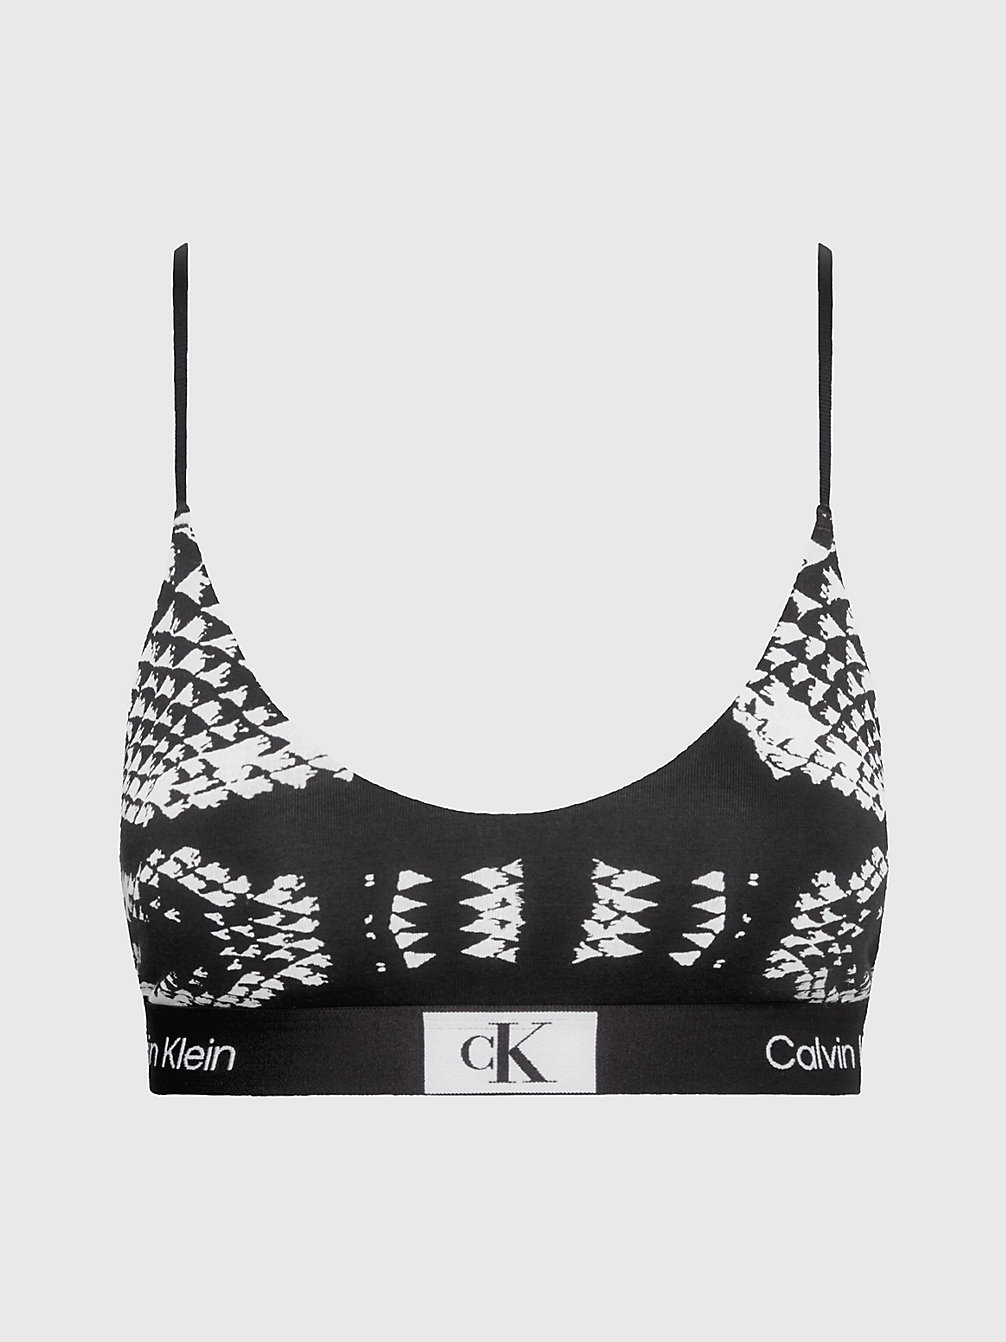 Brassière Ficelle - Ck96 > SNAKE PRINT/BLACK > undefined femmes > Calvin Klein